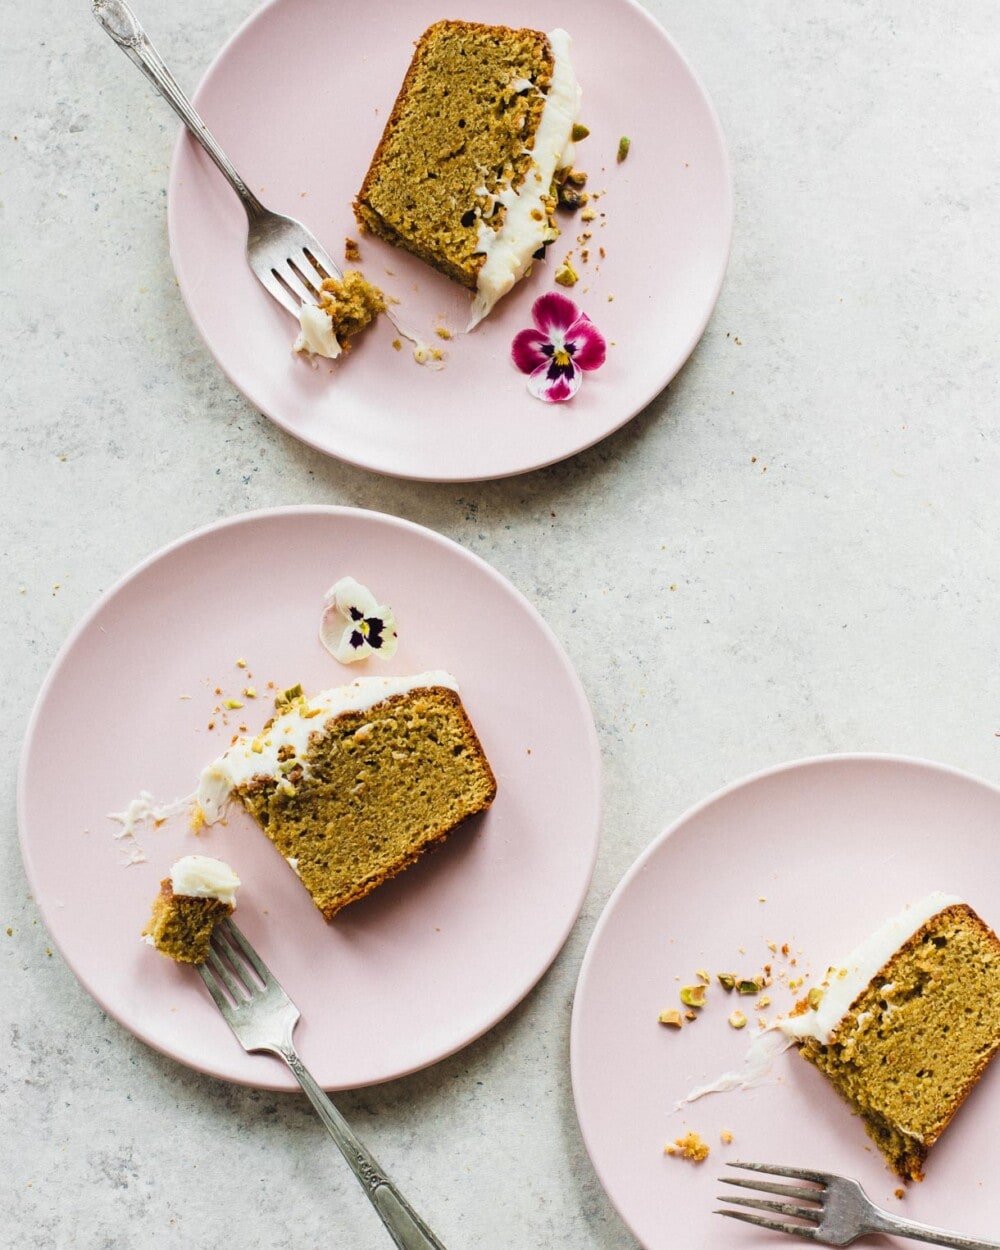 gluten-free pistachio cake on pink plates